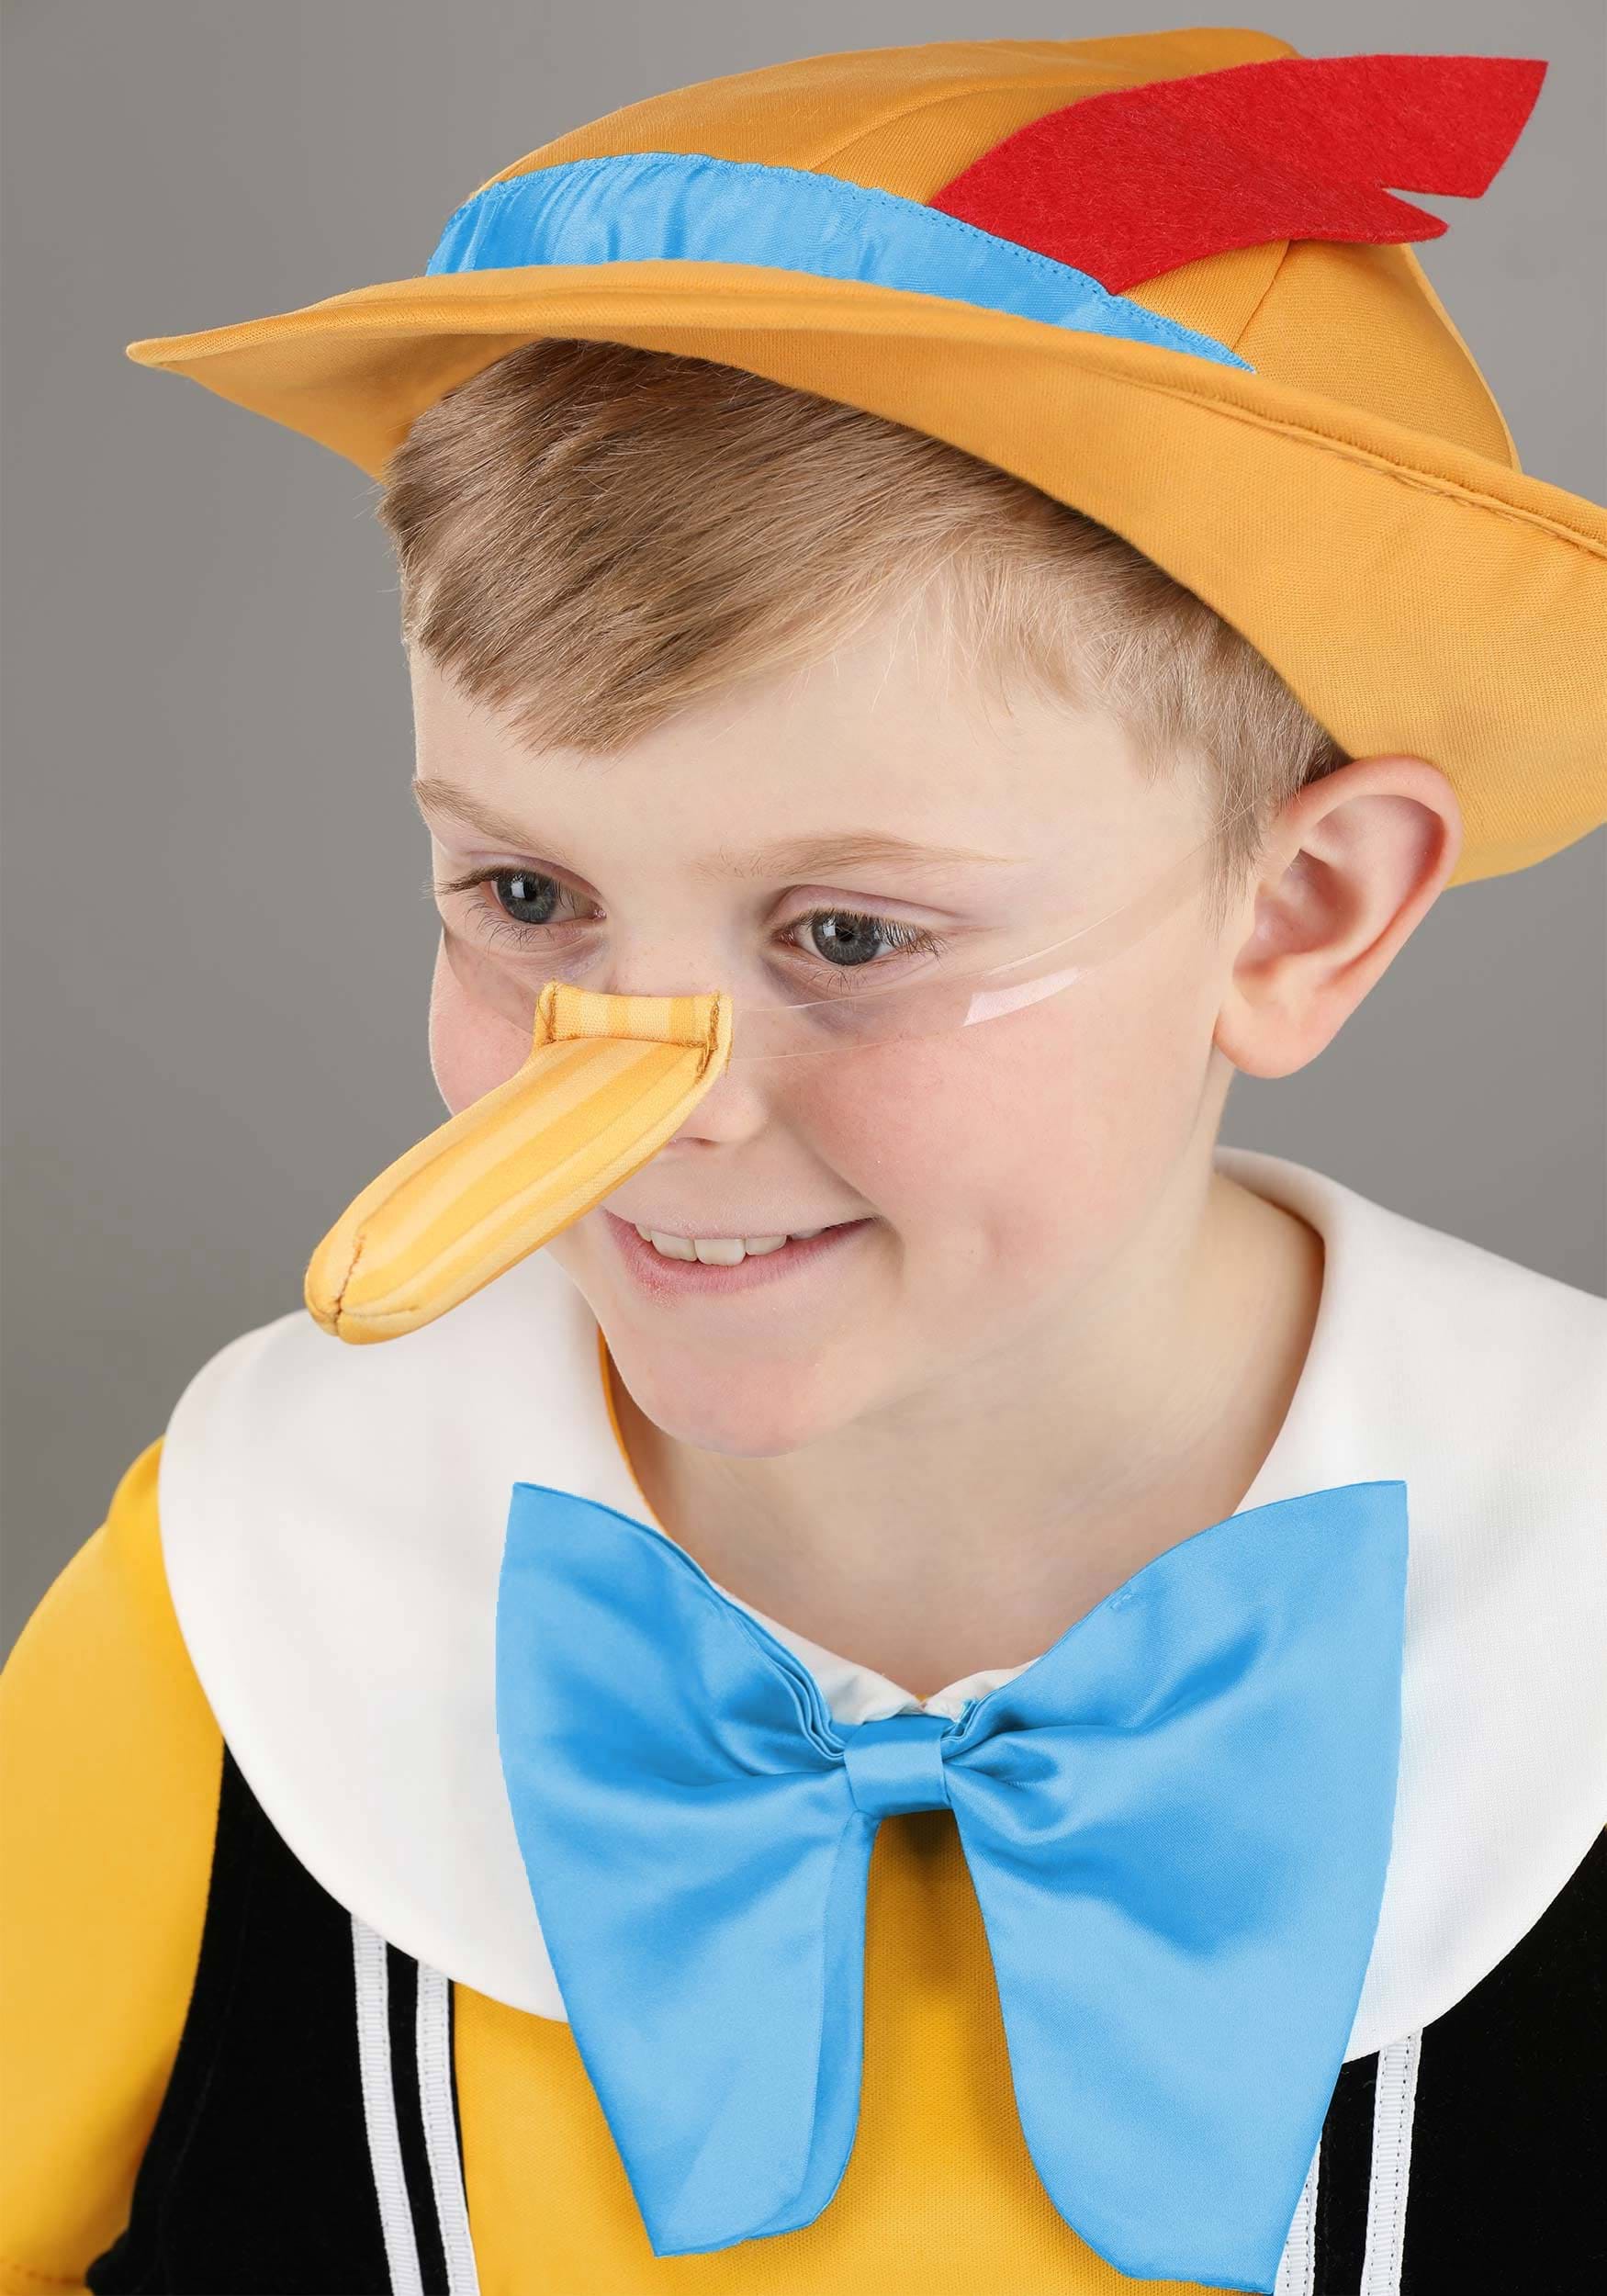 Deluxe Pinocchio Costume for Kids